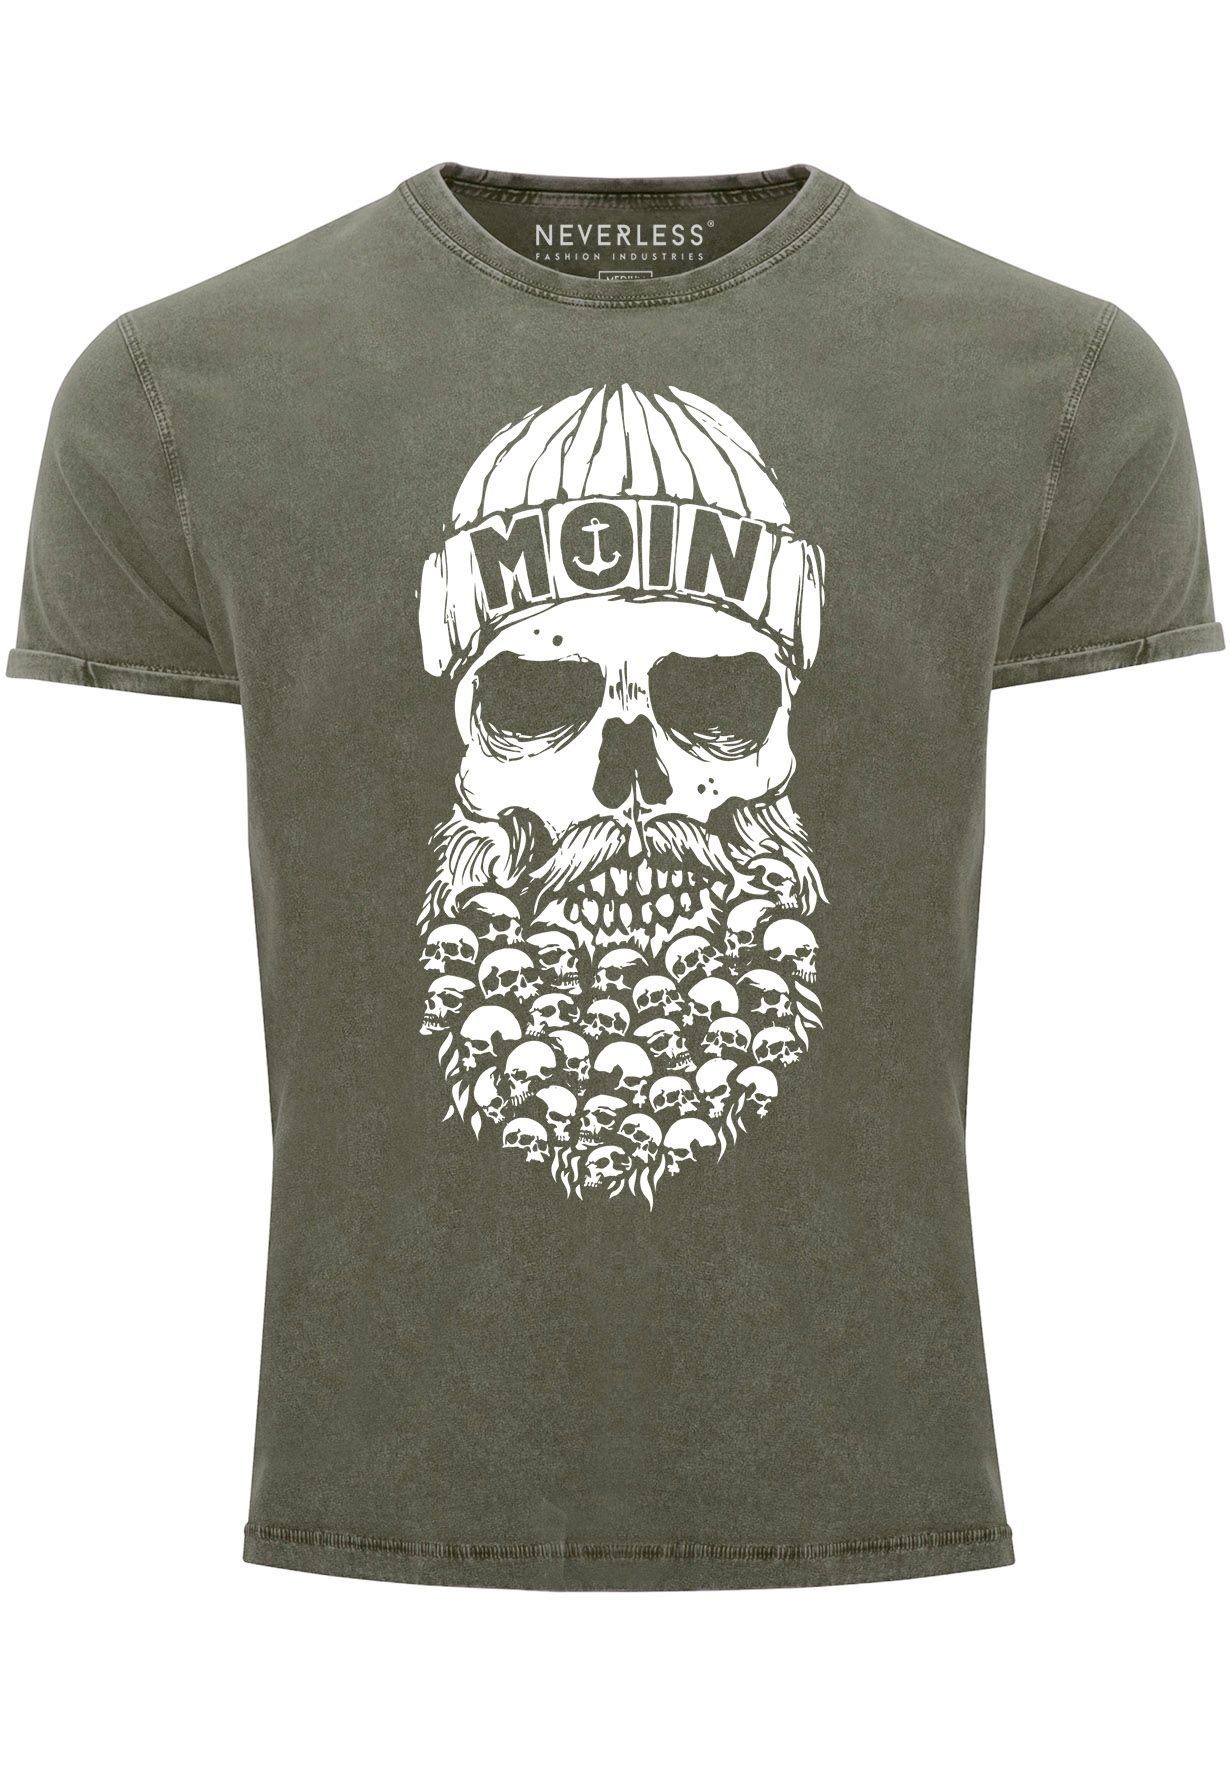 Neverless Print-Shirt Herren Ank Skull mit oliv Dialekt Nordisch Moin Hamburg Shirt Print Totenkopf Vintage